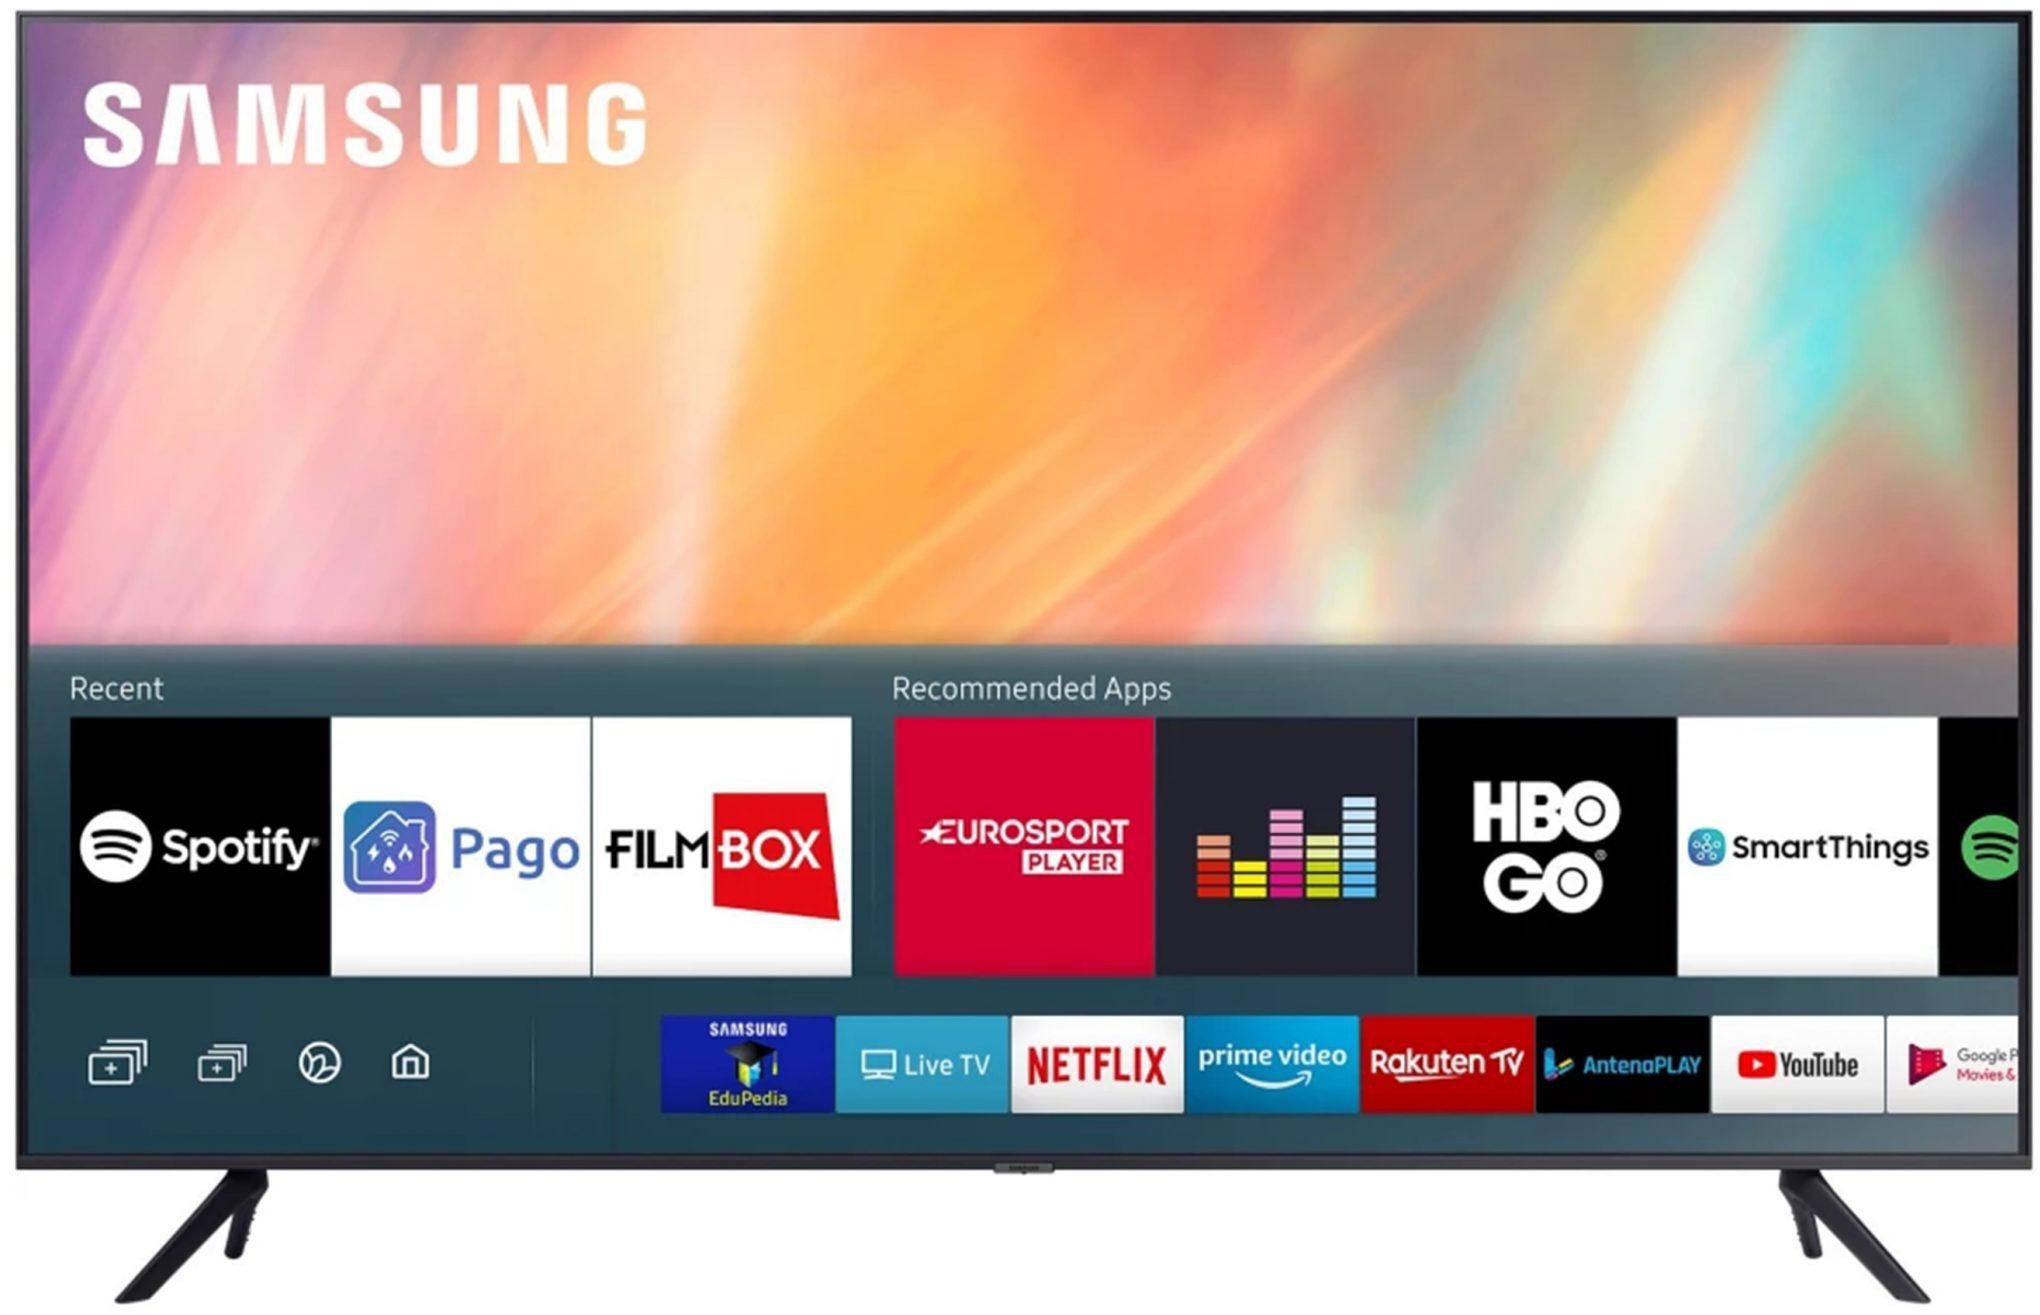 Samsung AU7000 55″ Inch HDR 4K UHD Smart LED TV